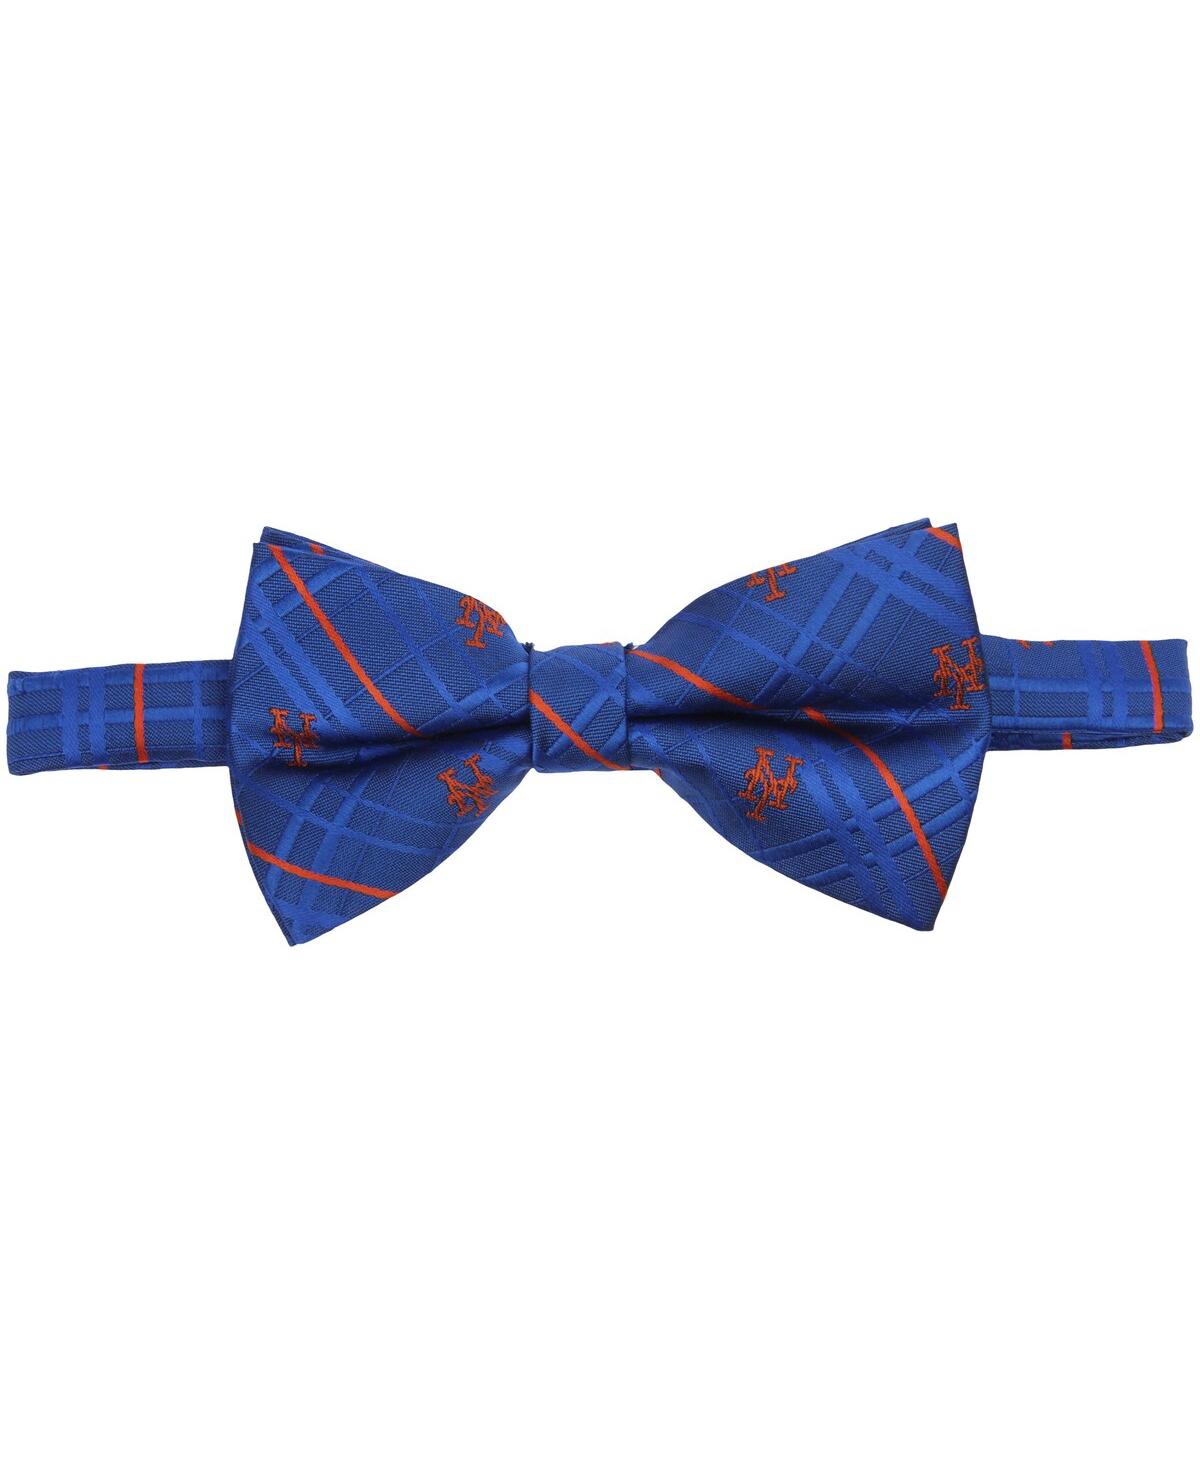 Men's Royal New York Mets Oxford Bow Tie - Royal